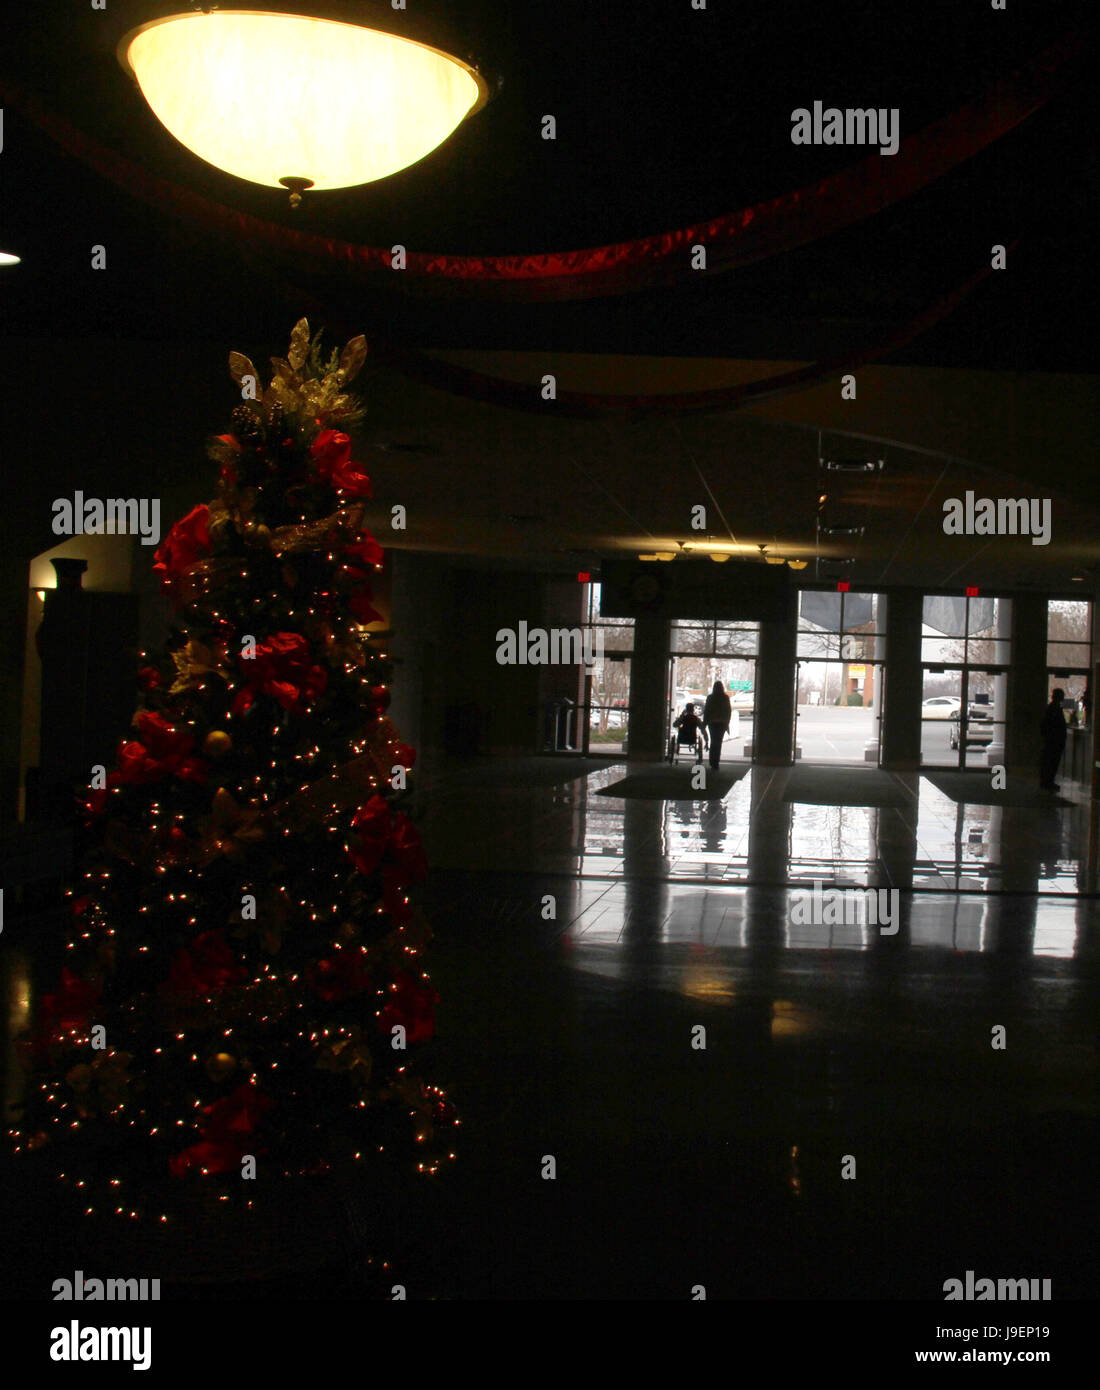 Illuminated Christmas tree on the hallway of large building Stock Photo